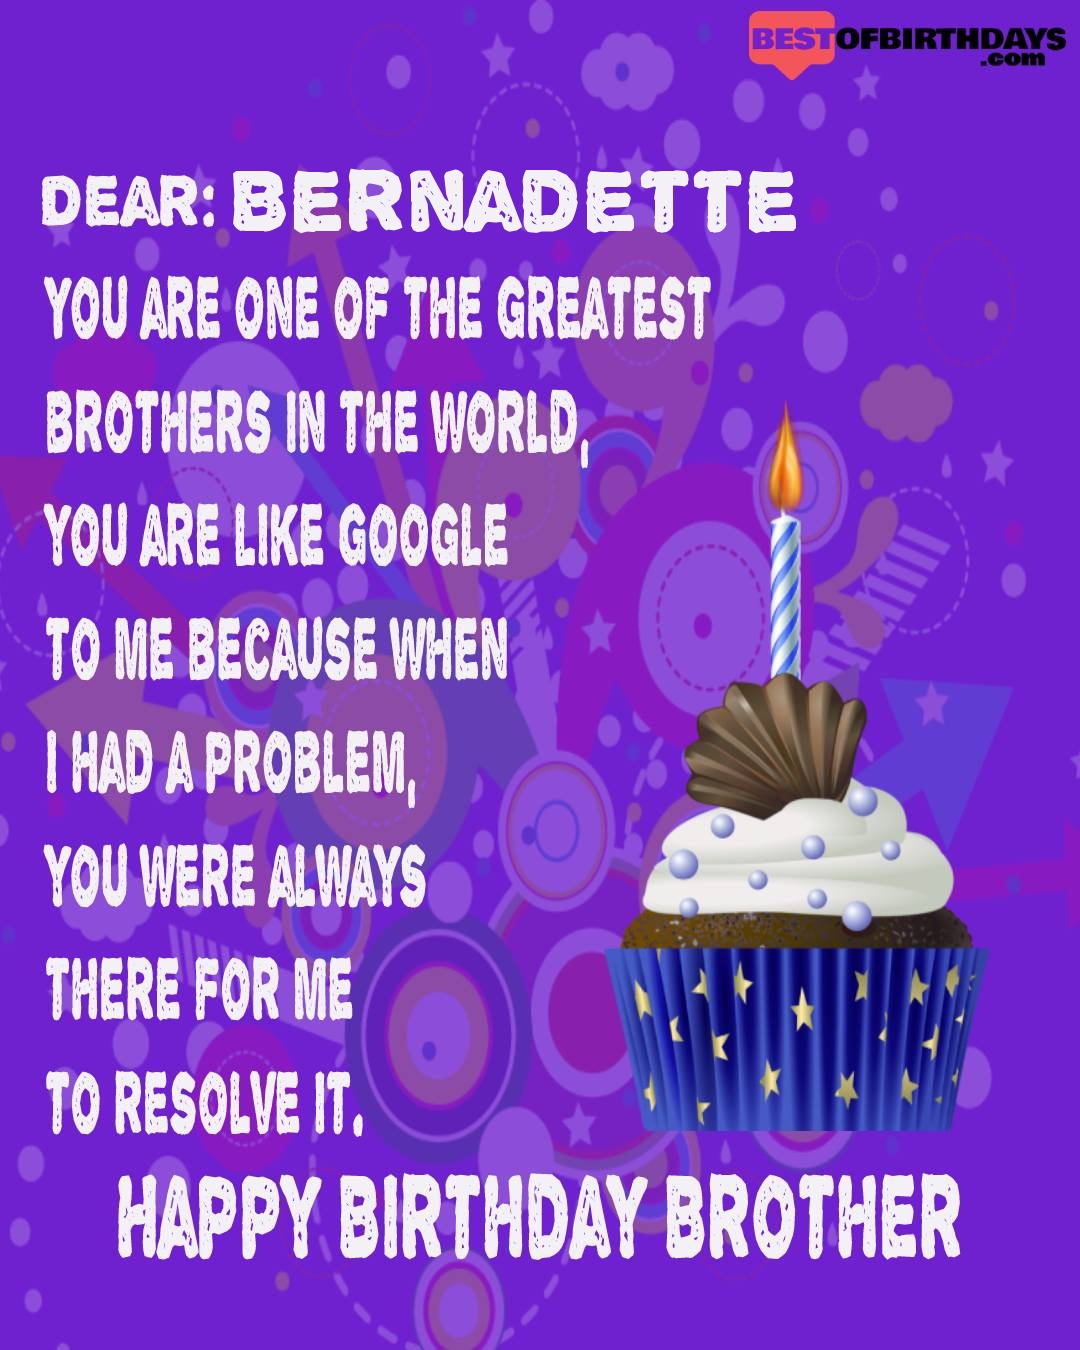 Happy birthday bernadette bhai brother bro